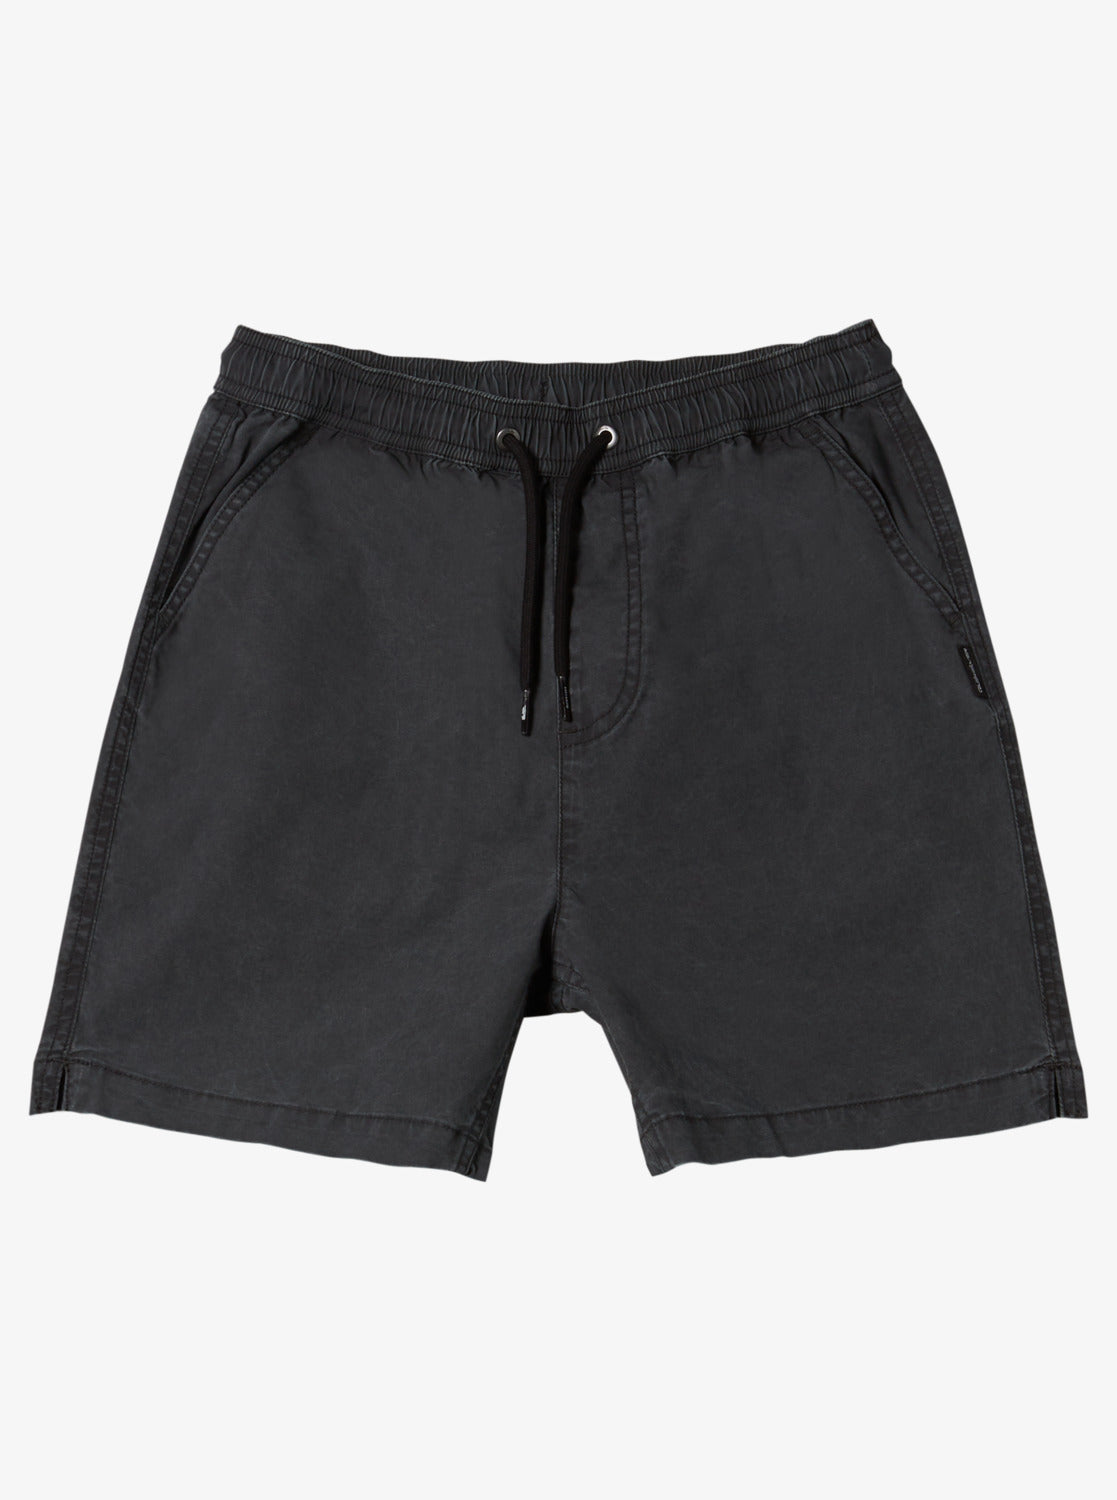 Boys 8-16 Taxer Shorts - Black